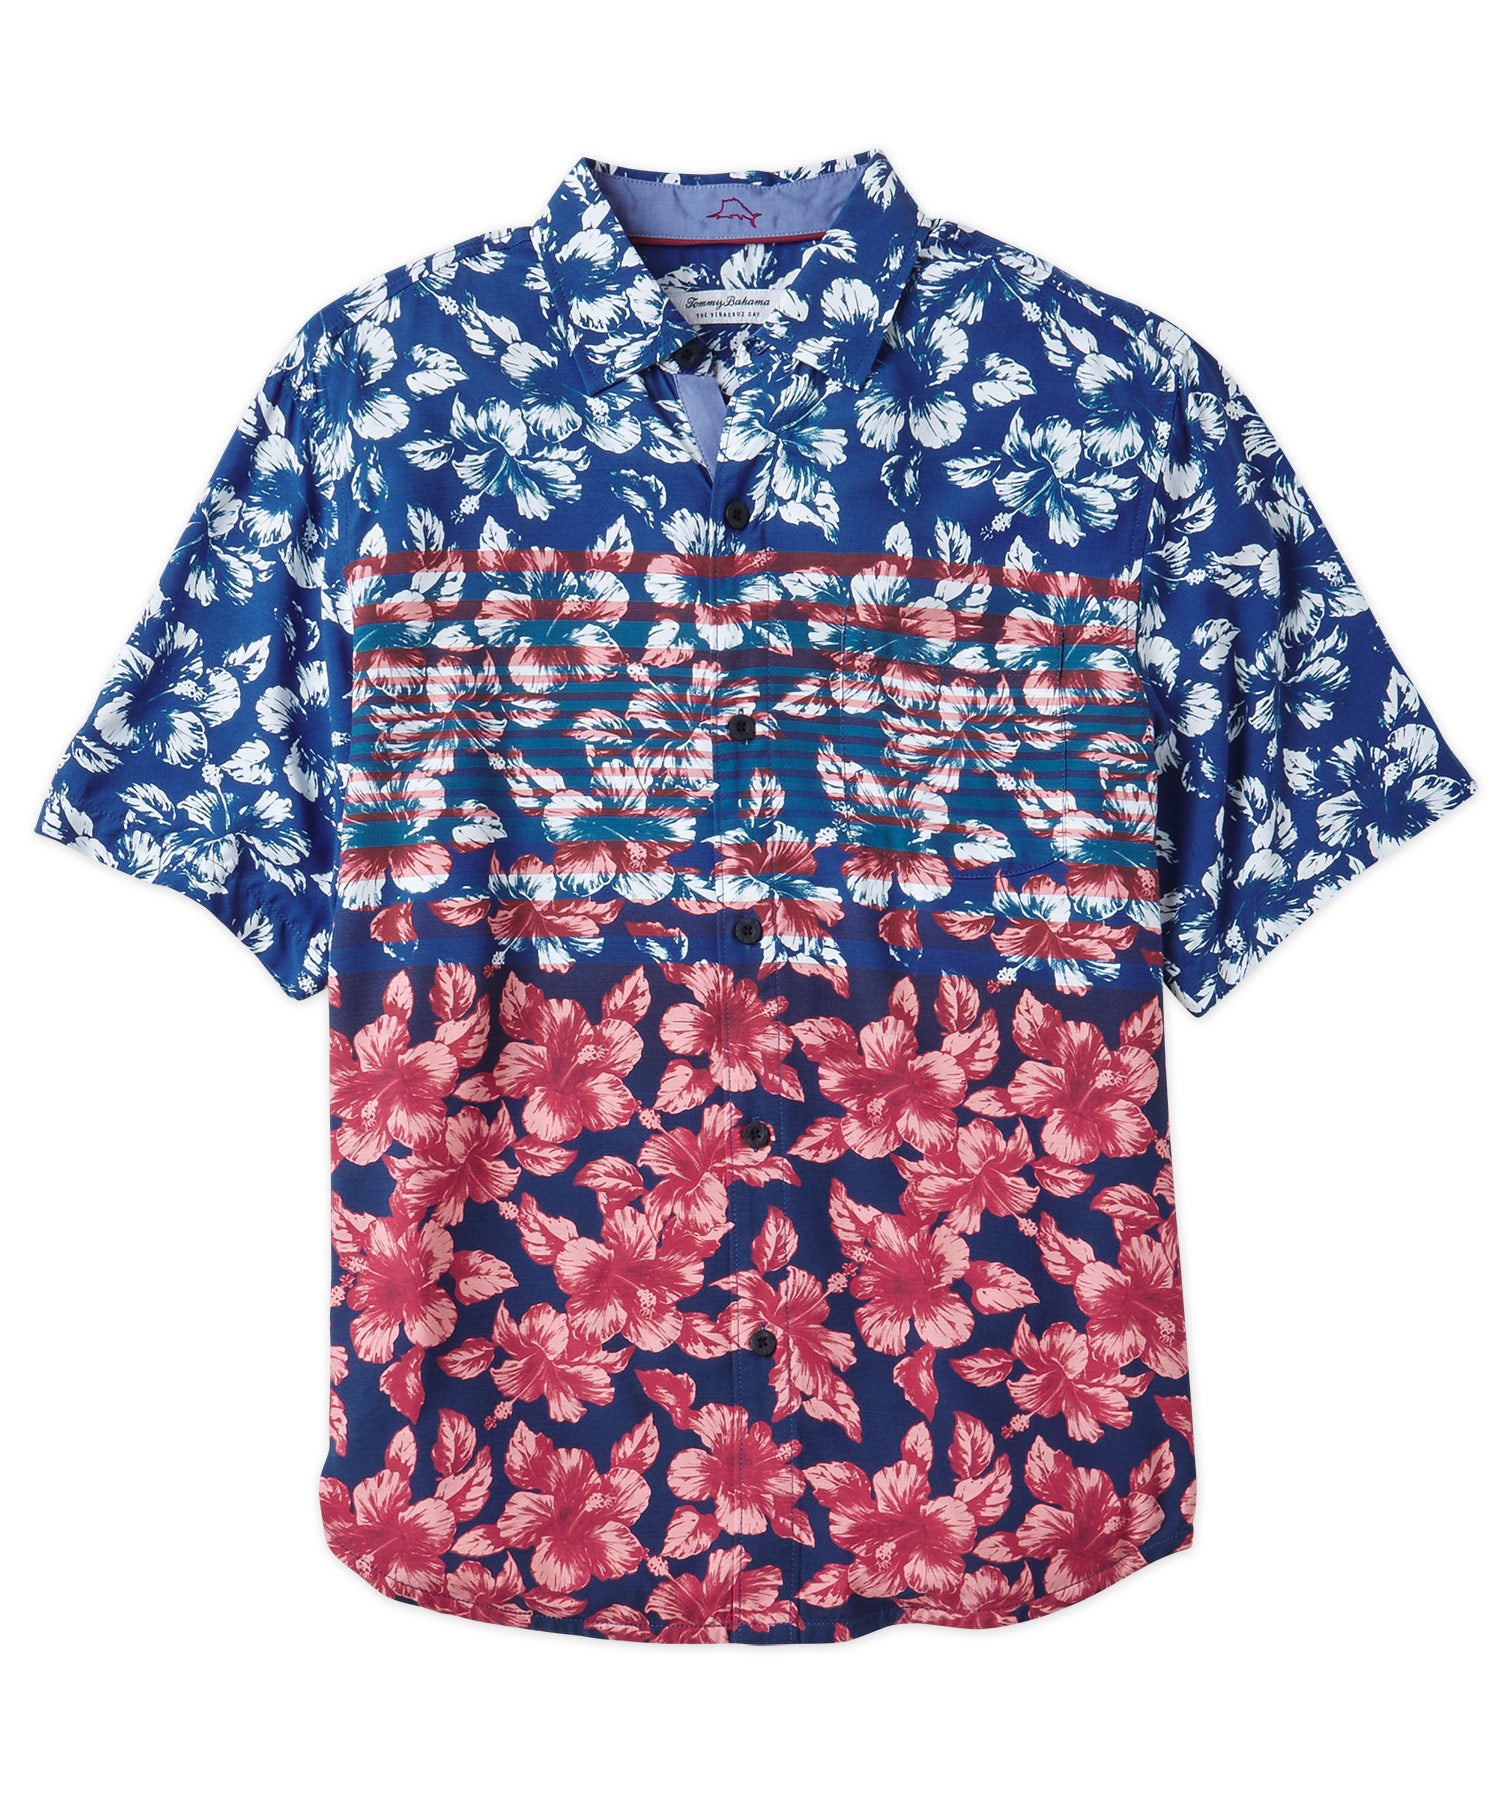 San Francisco Giants Mlb Tommy Bahama Hawaiian Shirt - Shibtee Clothing